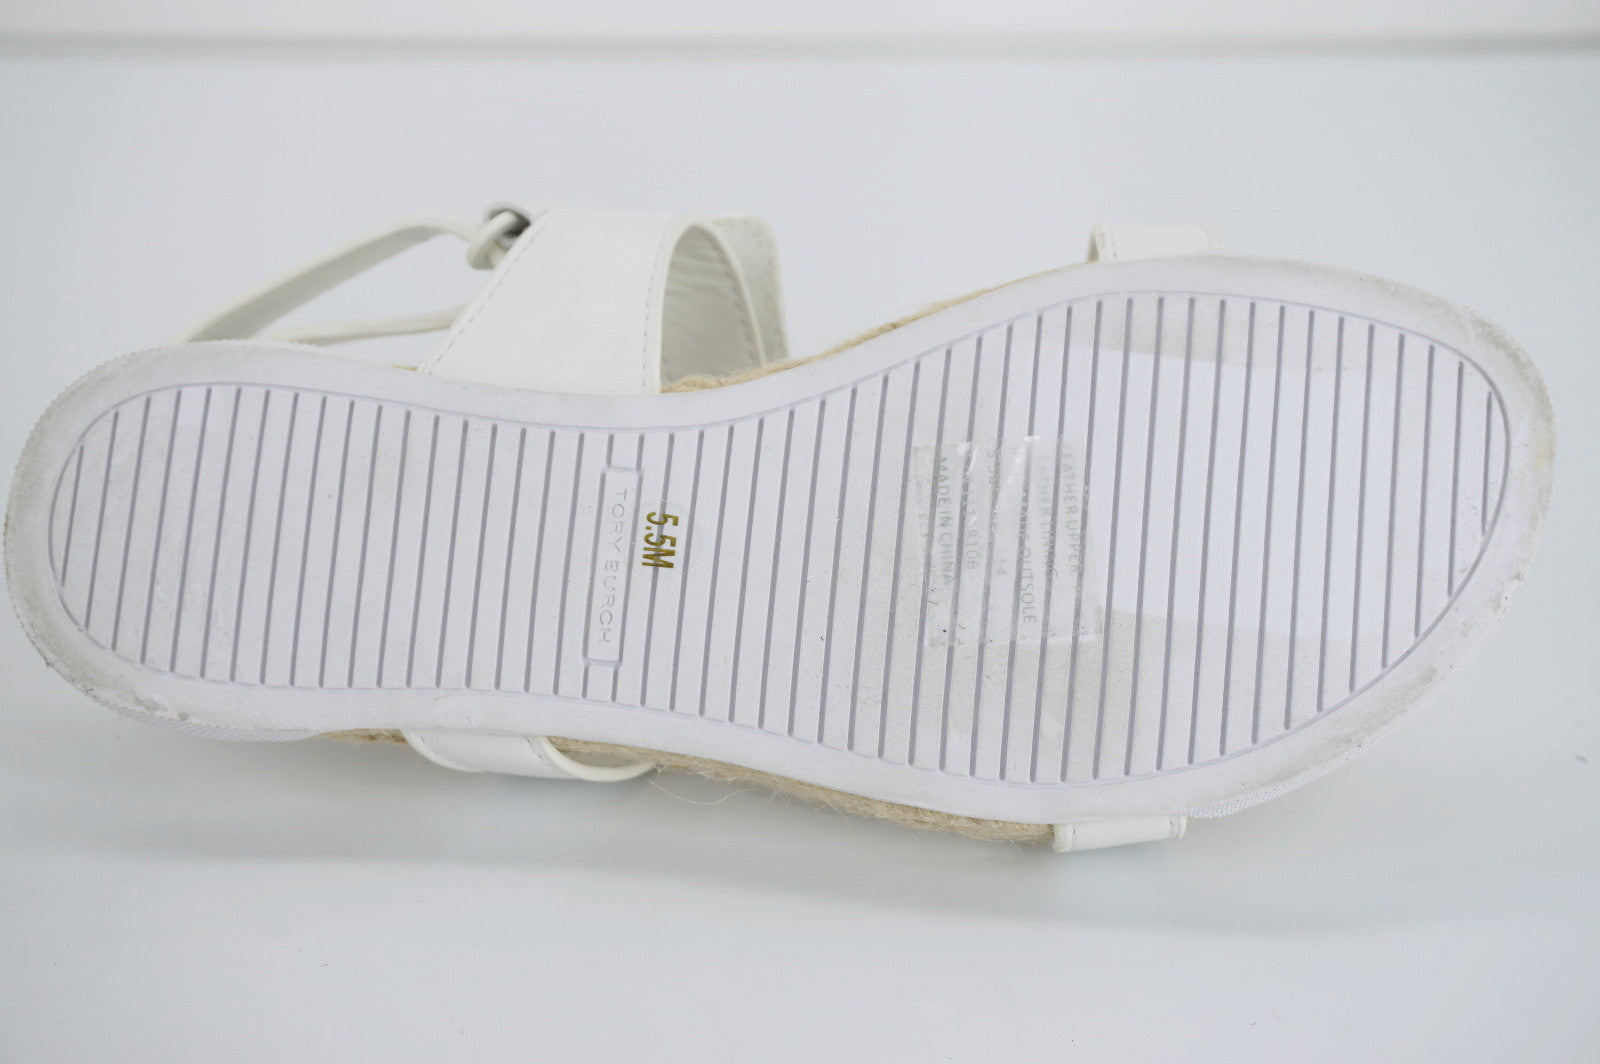 Tory Burch White Leather Strappy Bumper Espadrille Sandal Size 5.5 Flat NIB